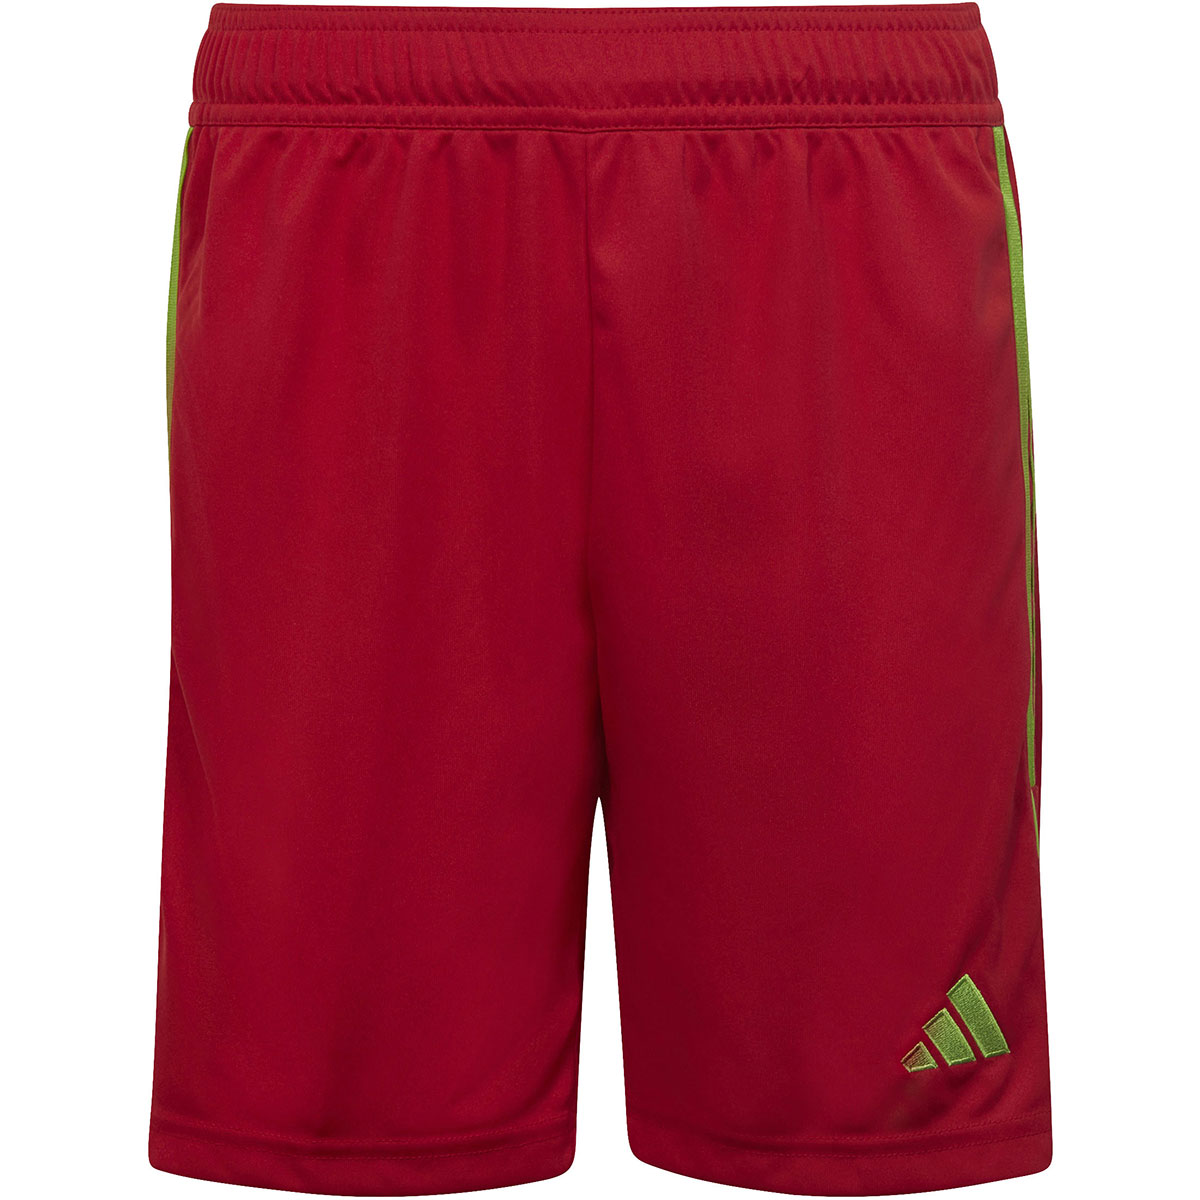 Adidas Kinder Shorts Tiro 23 rot-grün